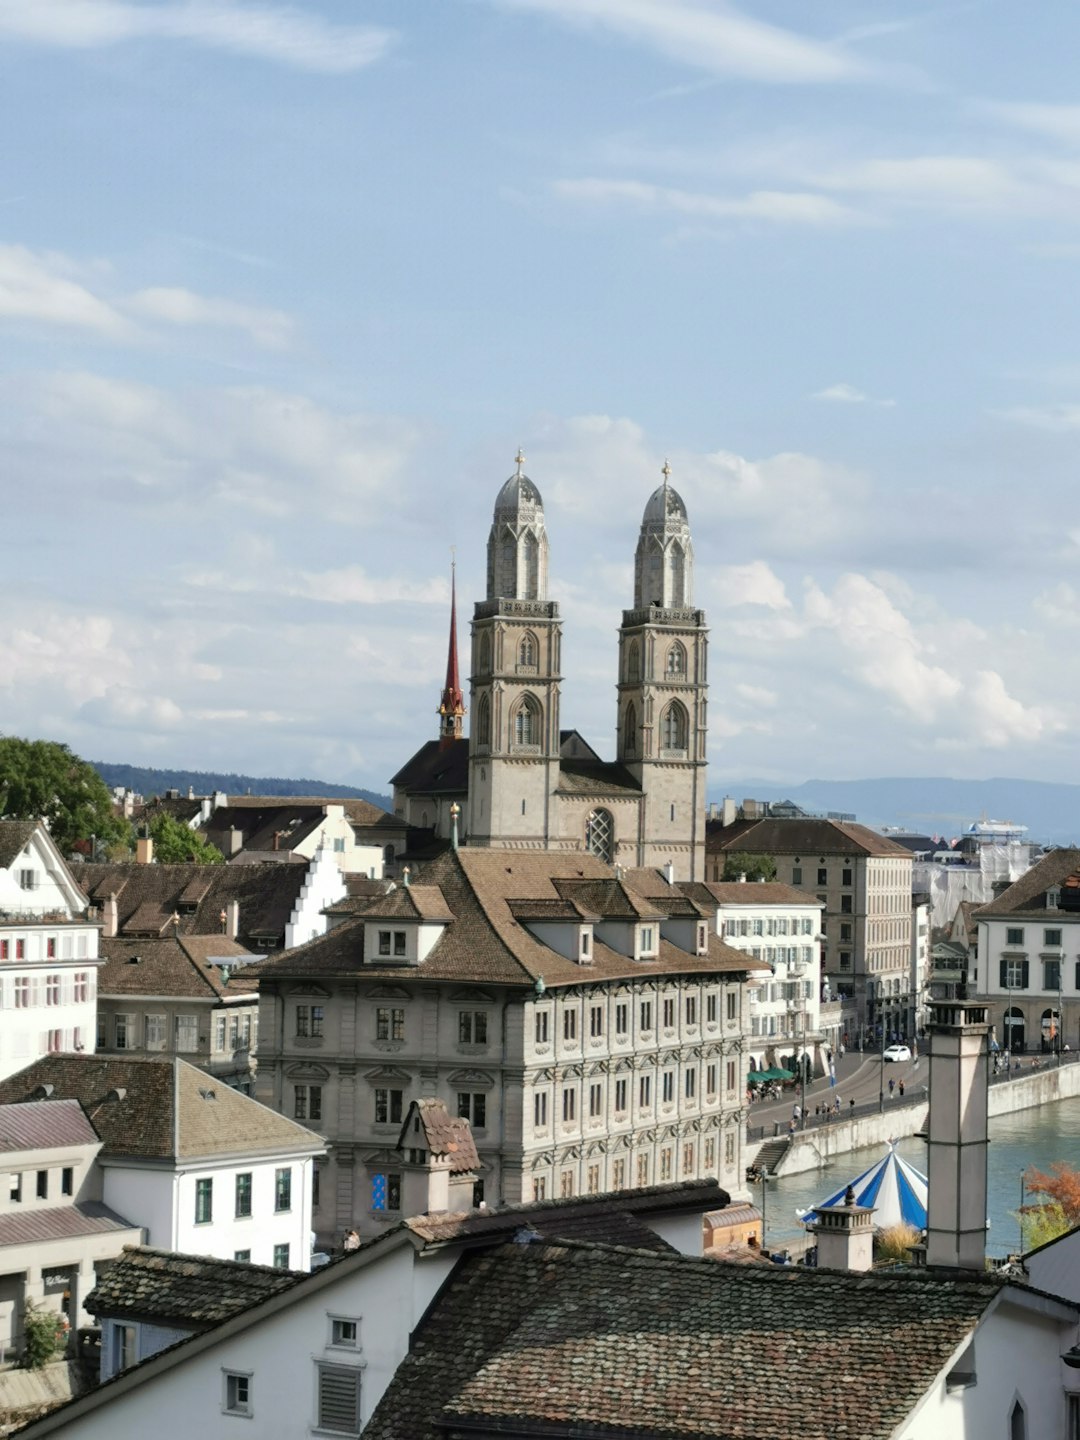 Town photo spot Wohllebgasse 2 Lucerne